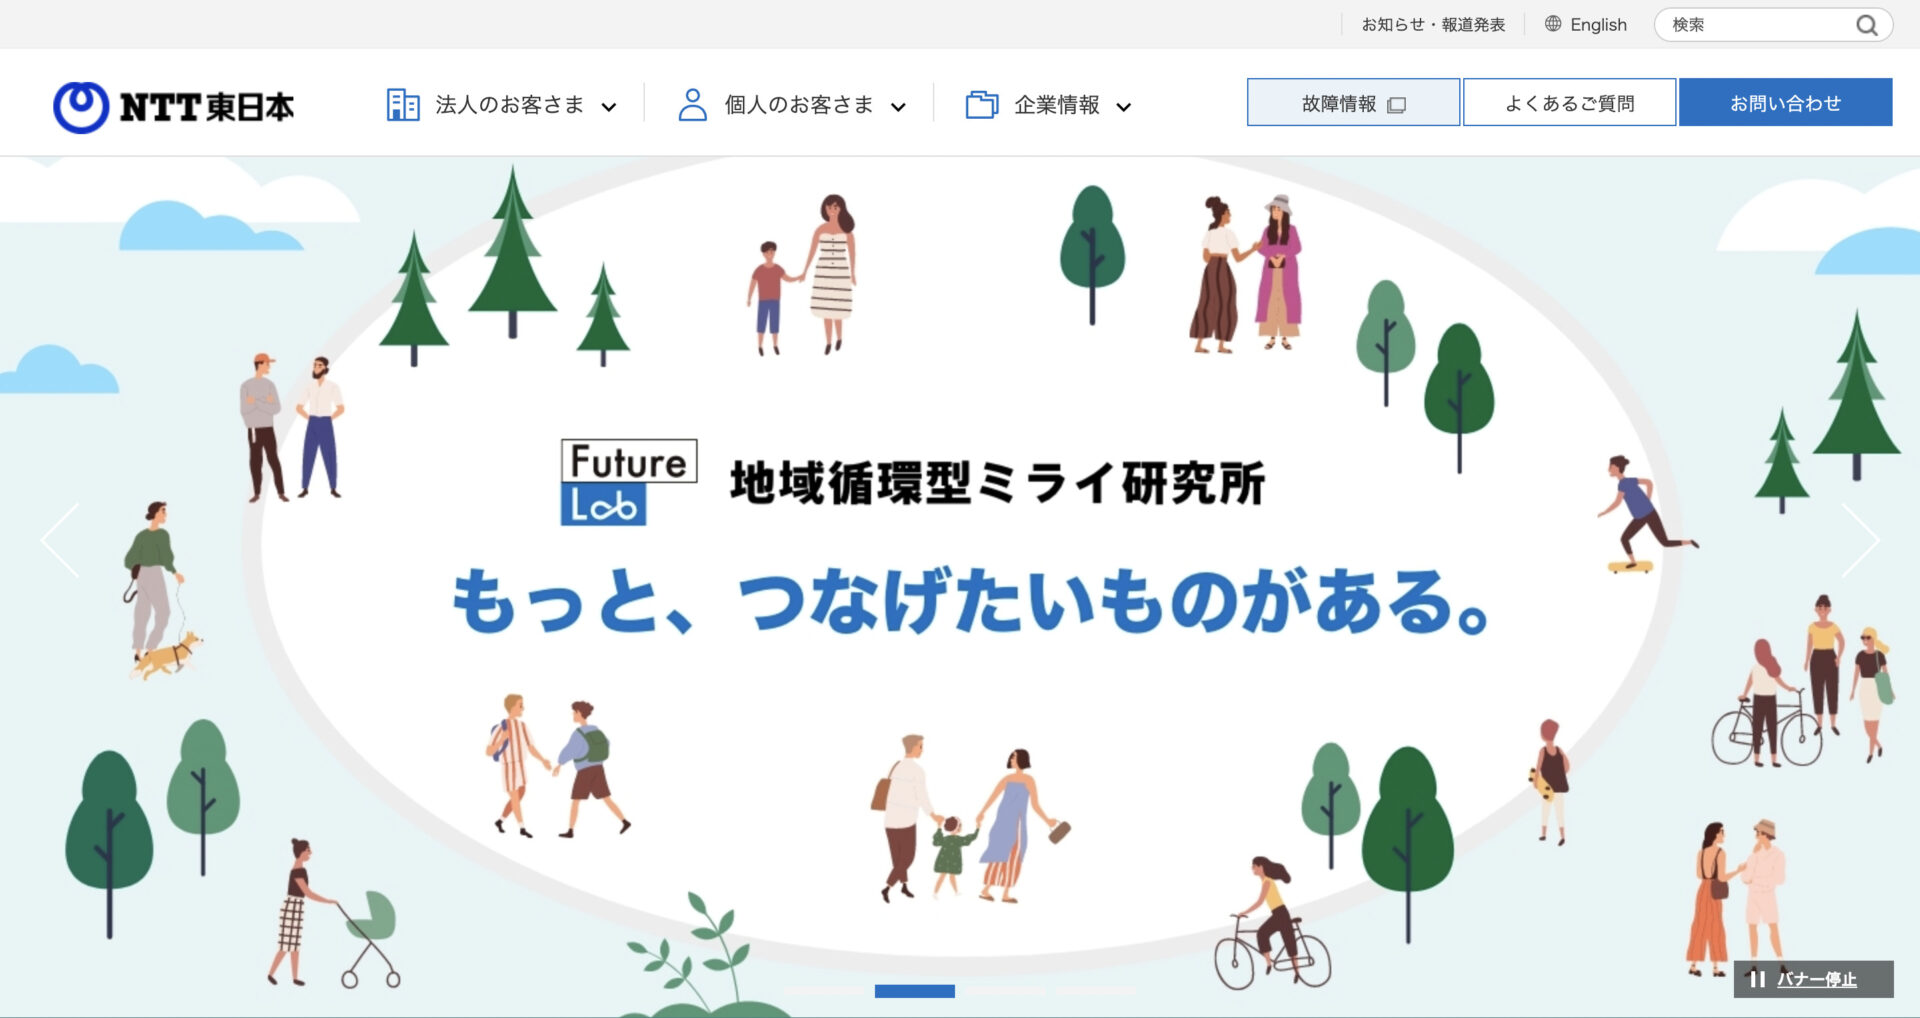 “NTT東日本のホームページ”